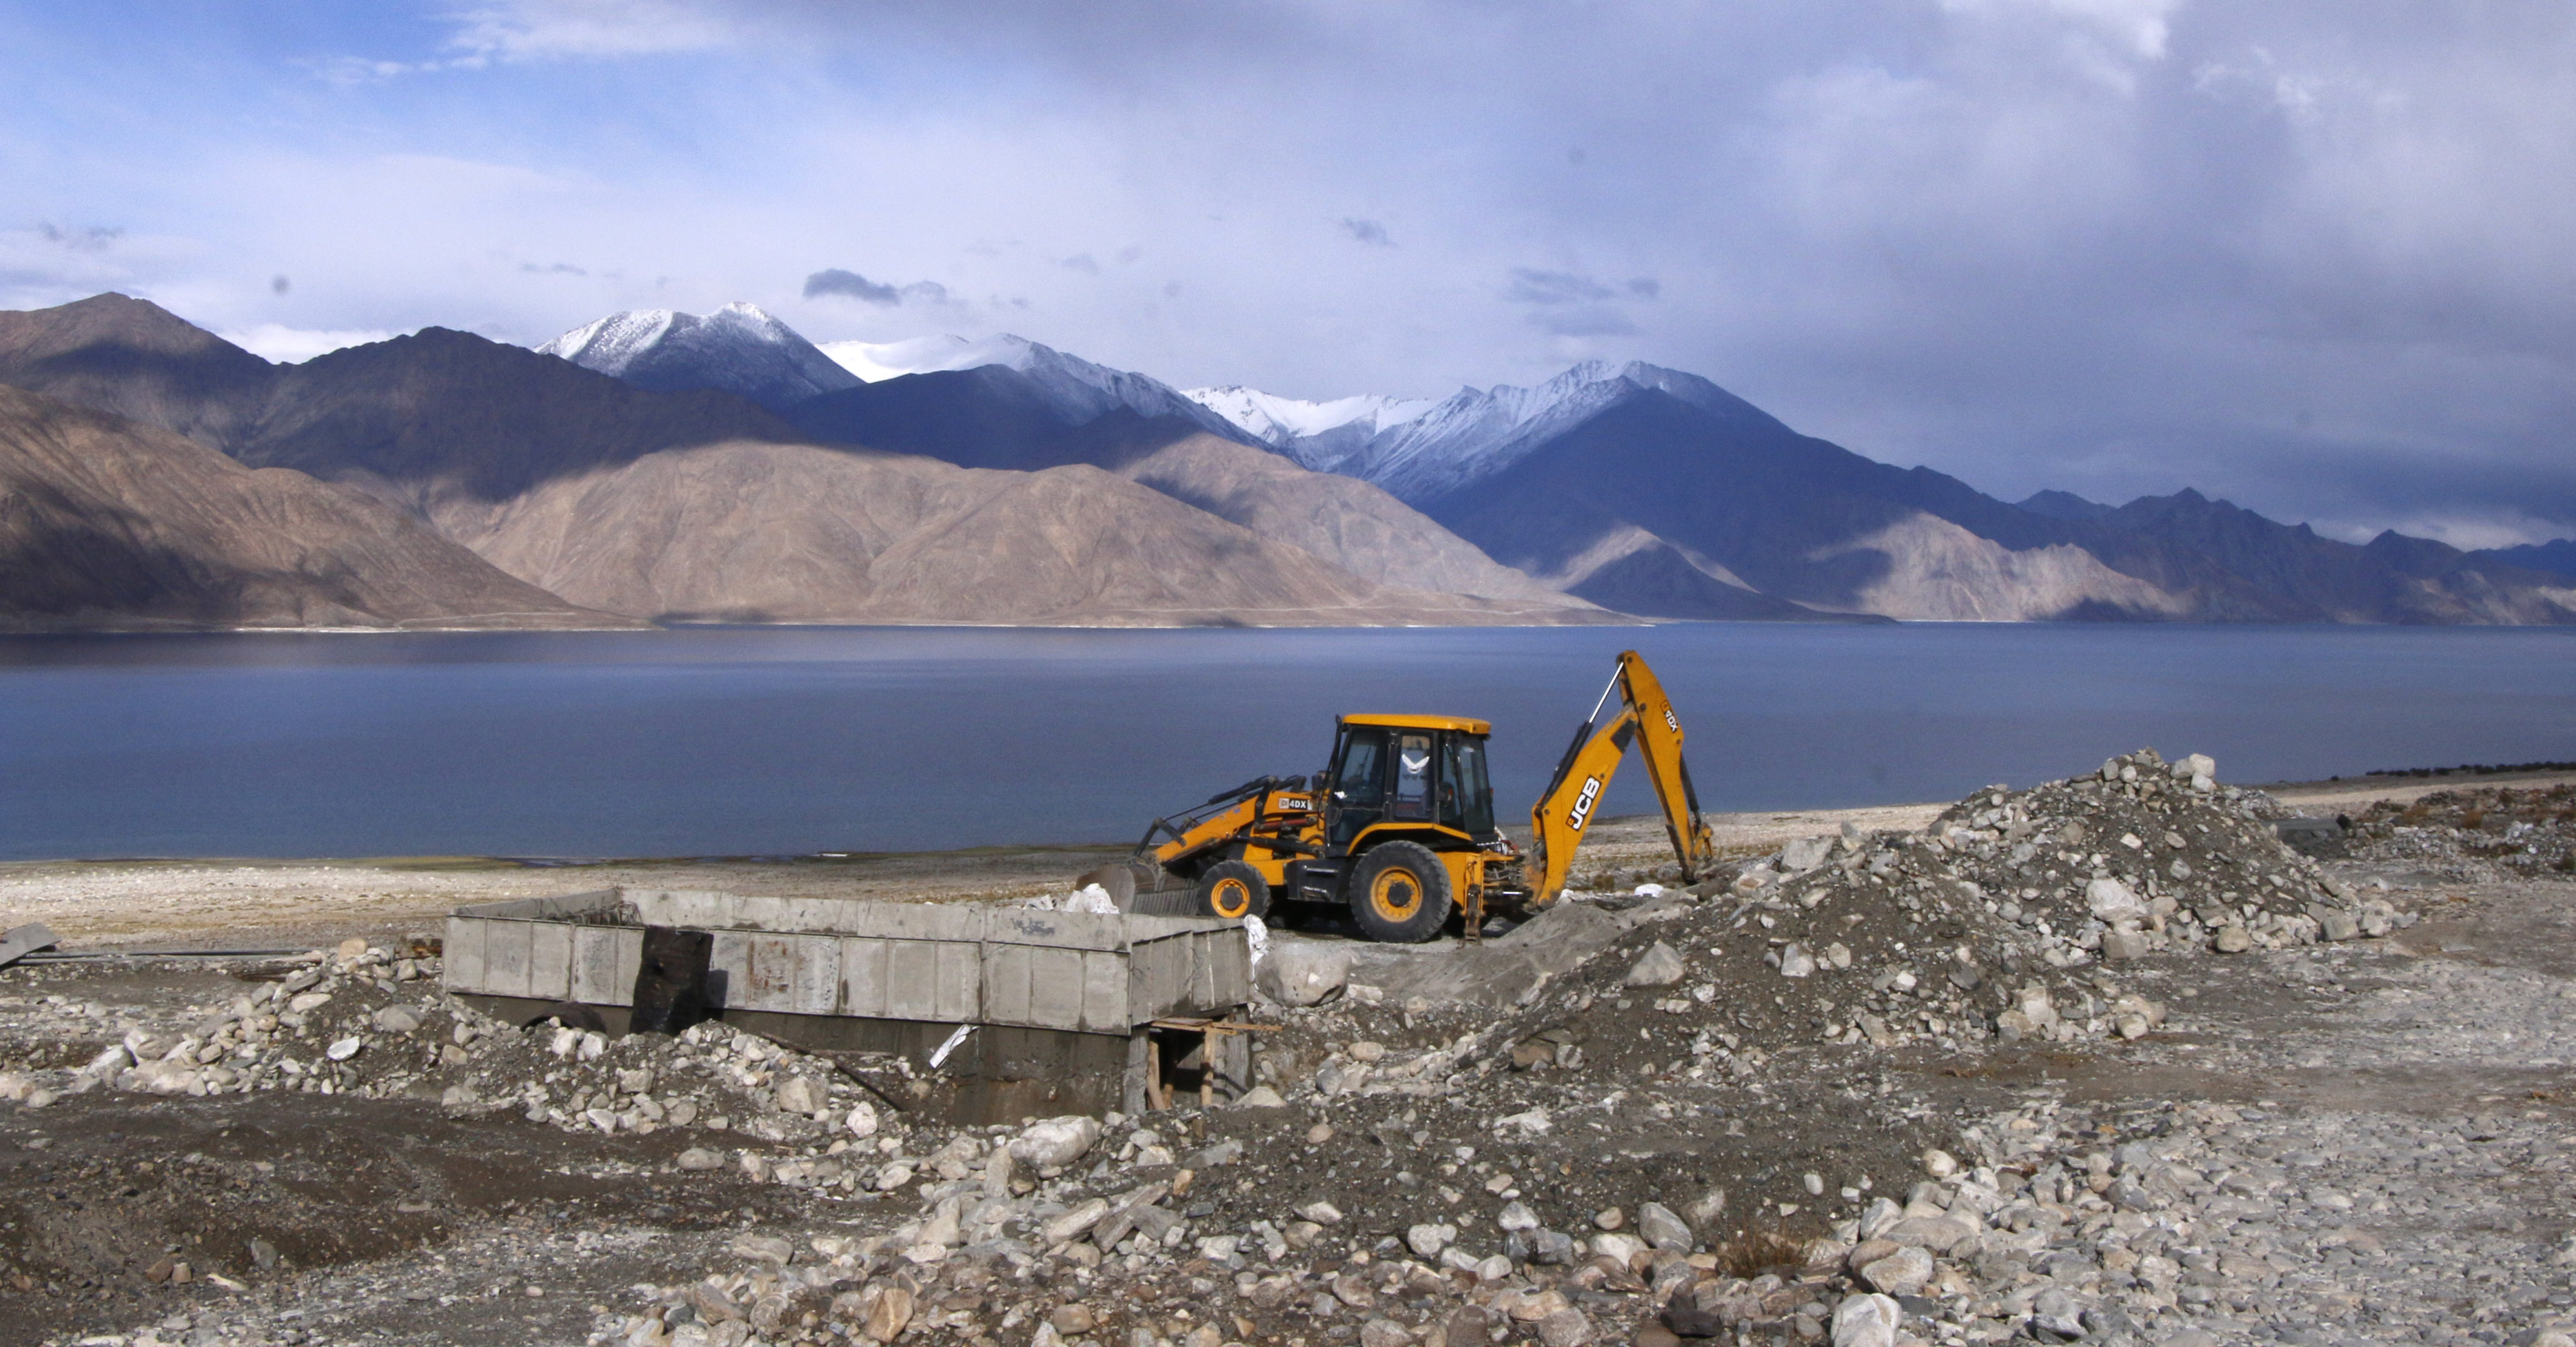 A bulldozer working on a road near Pangong Tso lake in the Himalayas. Photo: Kamran Yousuf